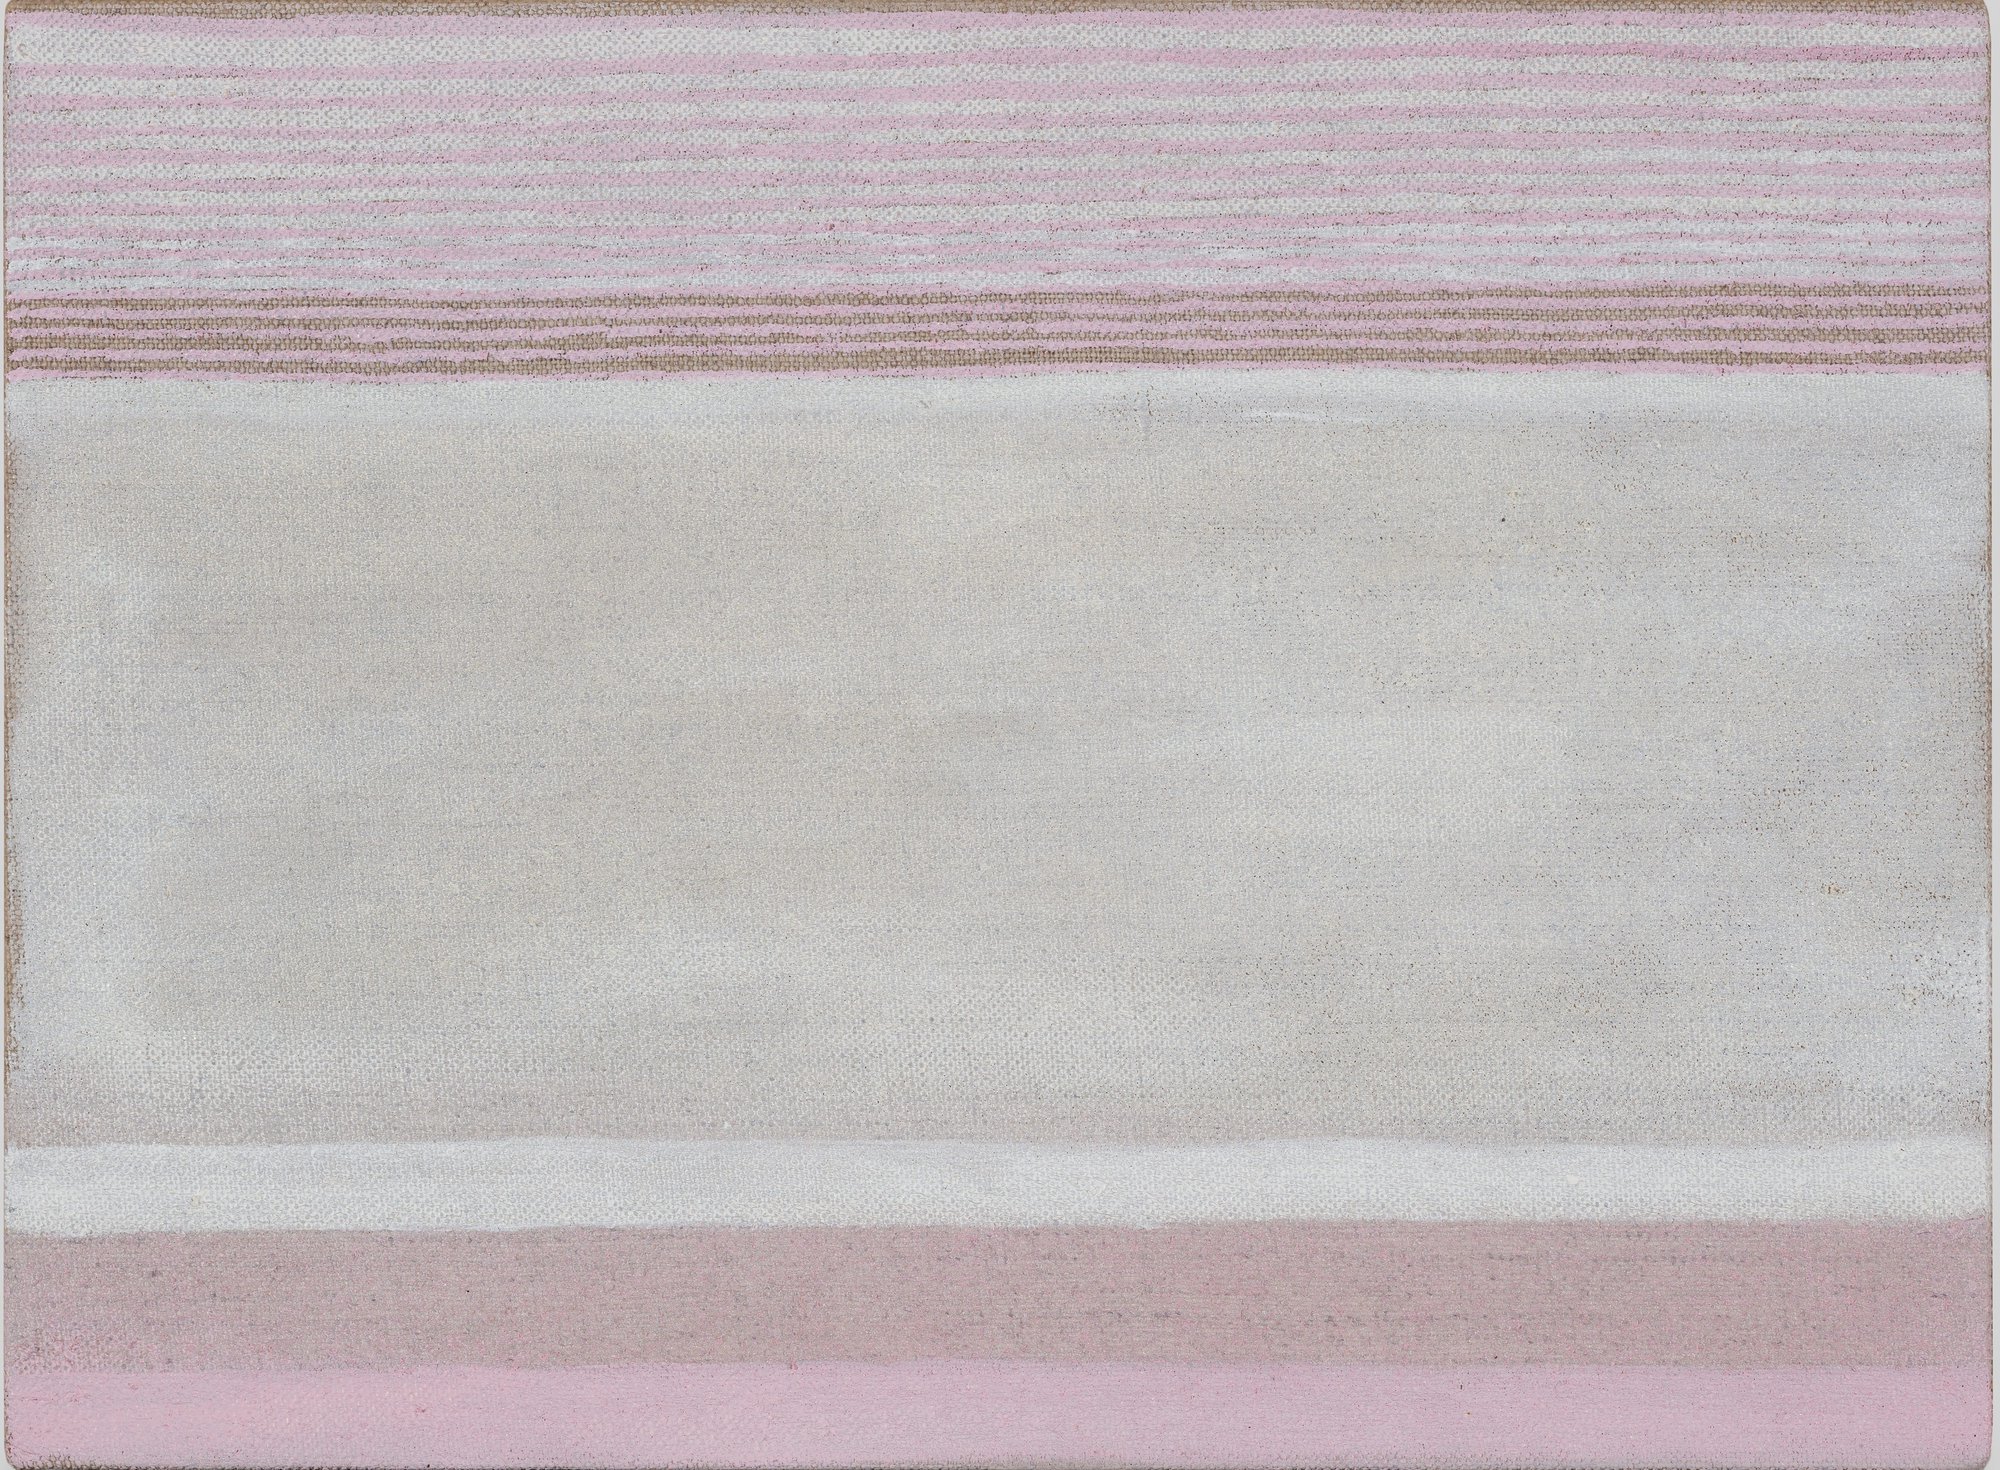 Leidy Churchman, The Between is Ringing (Bodhichitta Baby), oil on linen, 18 x 24.4 cm, 2020